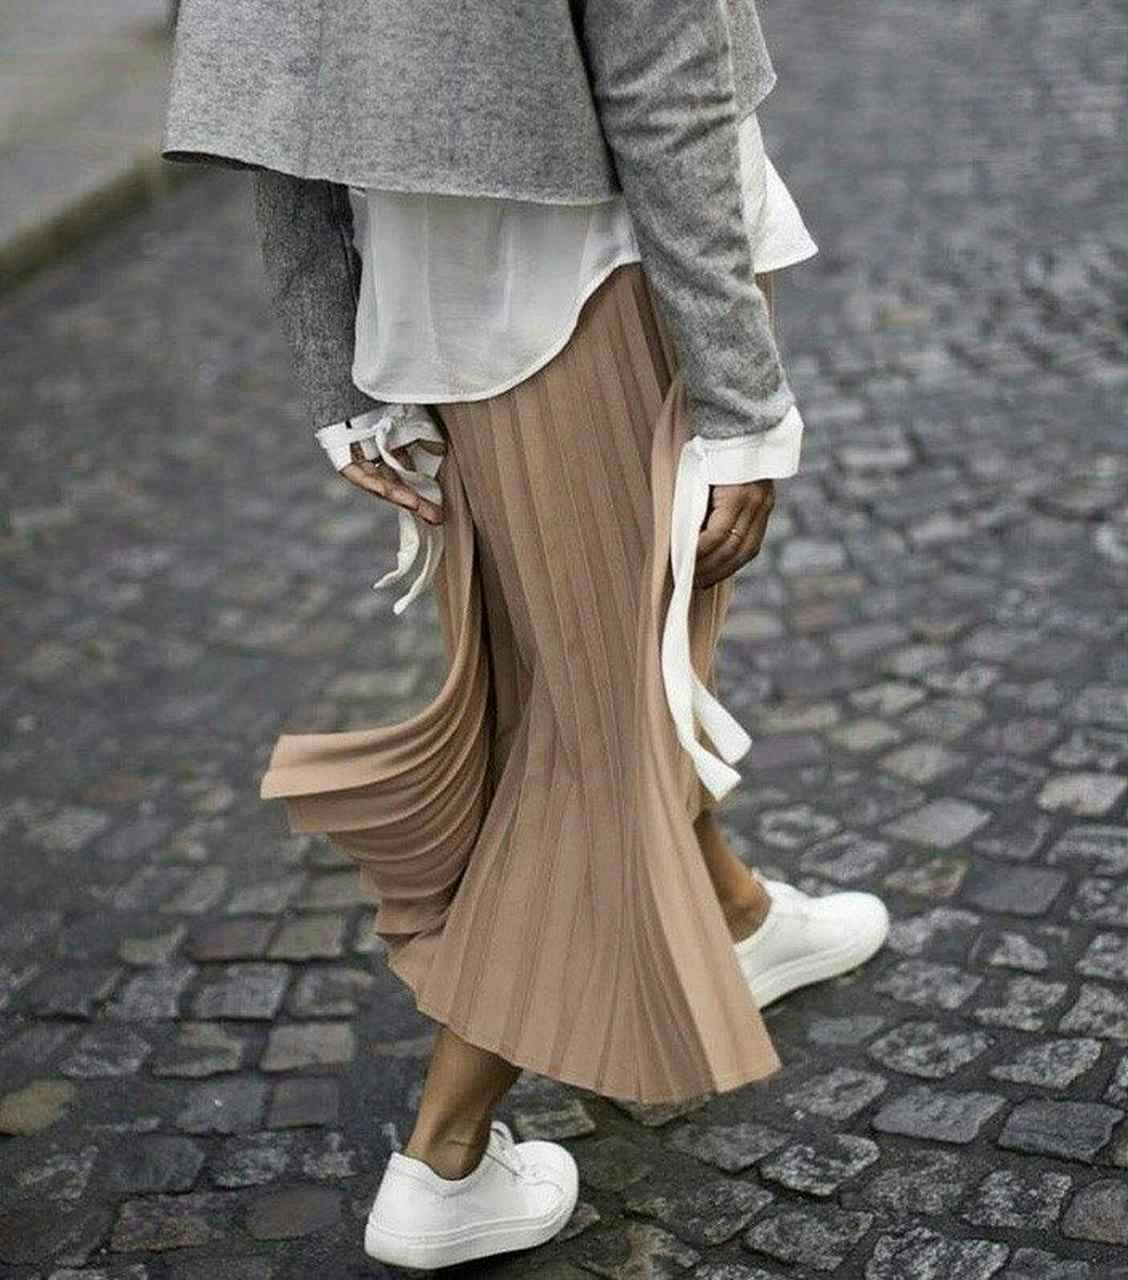 clothing skirt adult female person woman pants footwear shoe